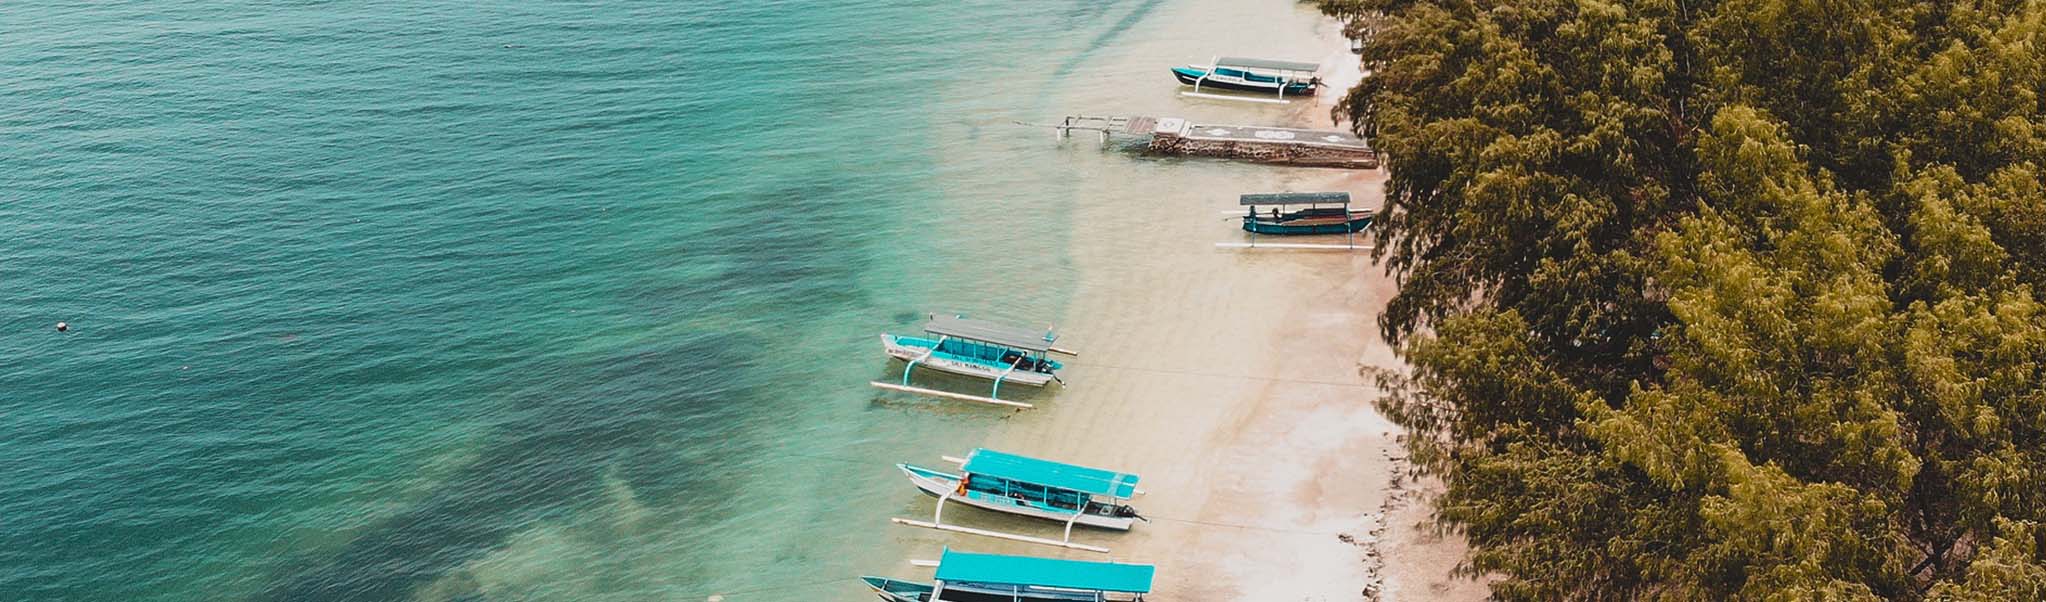 Lombok indonesie spot de plongee plage vincent thepaut